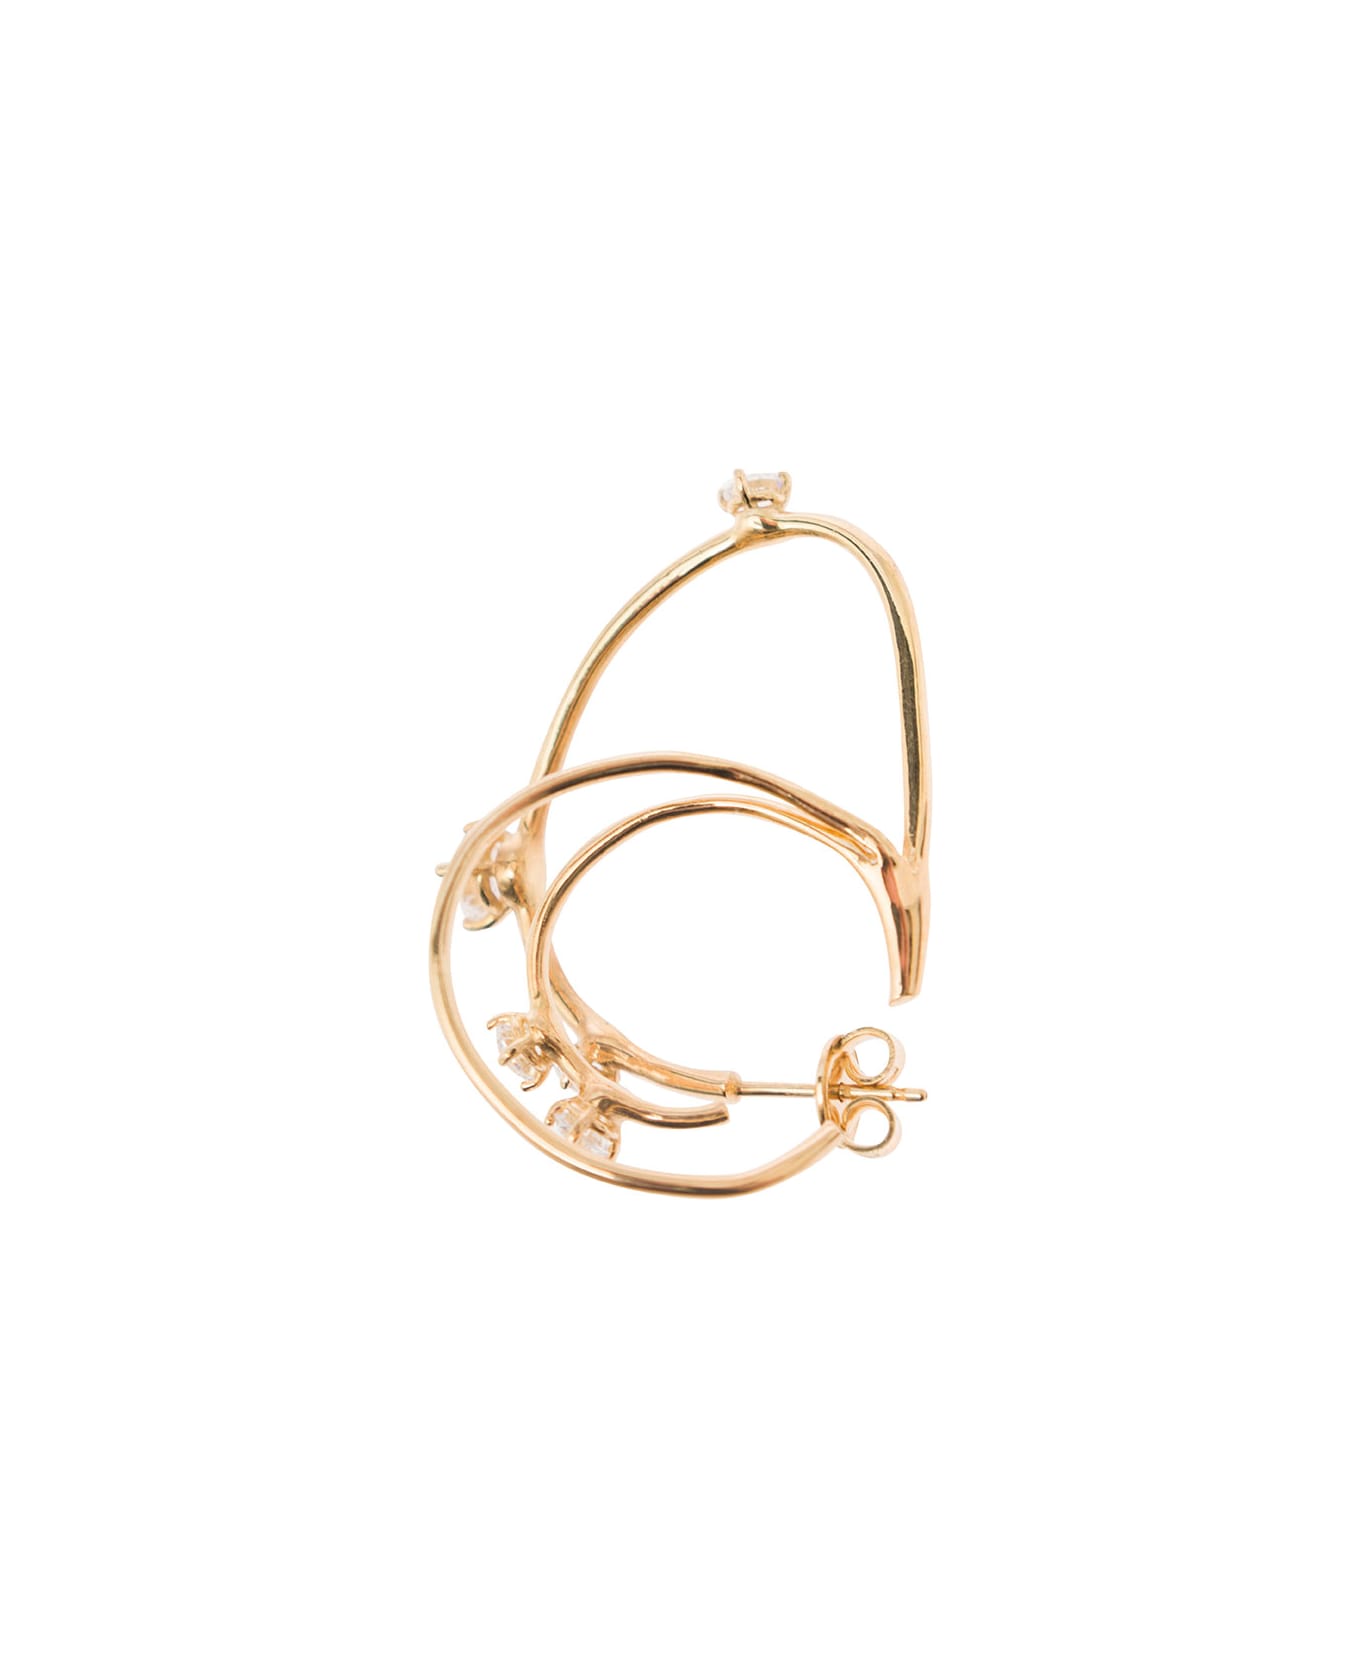 Panconesi 'constellation' Gold-colored Multi Hoops Earrings In Sterling Silver Woman - Metallic イヤリング